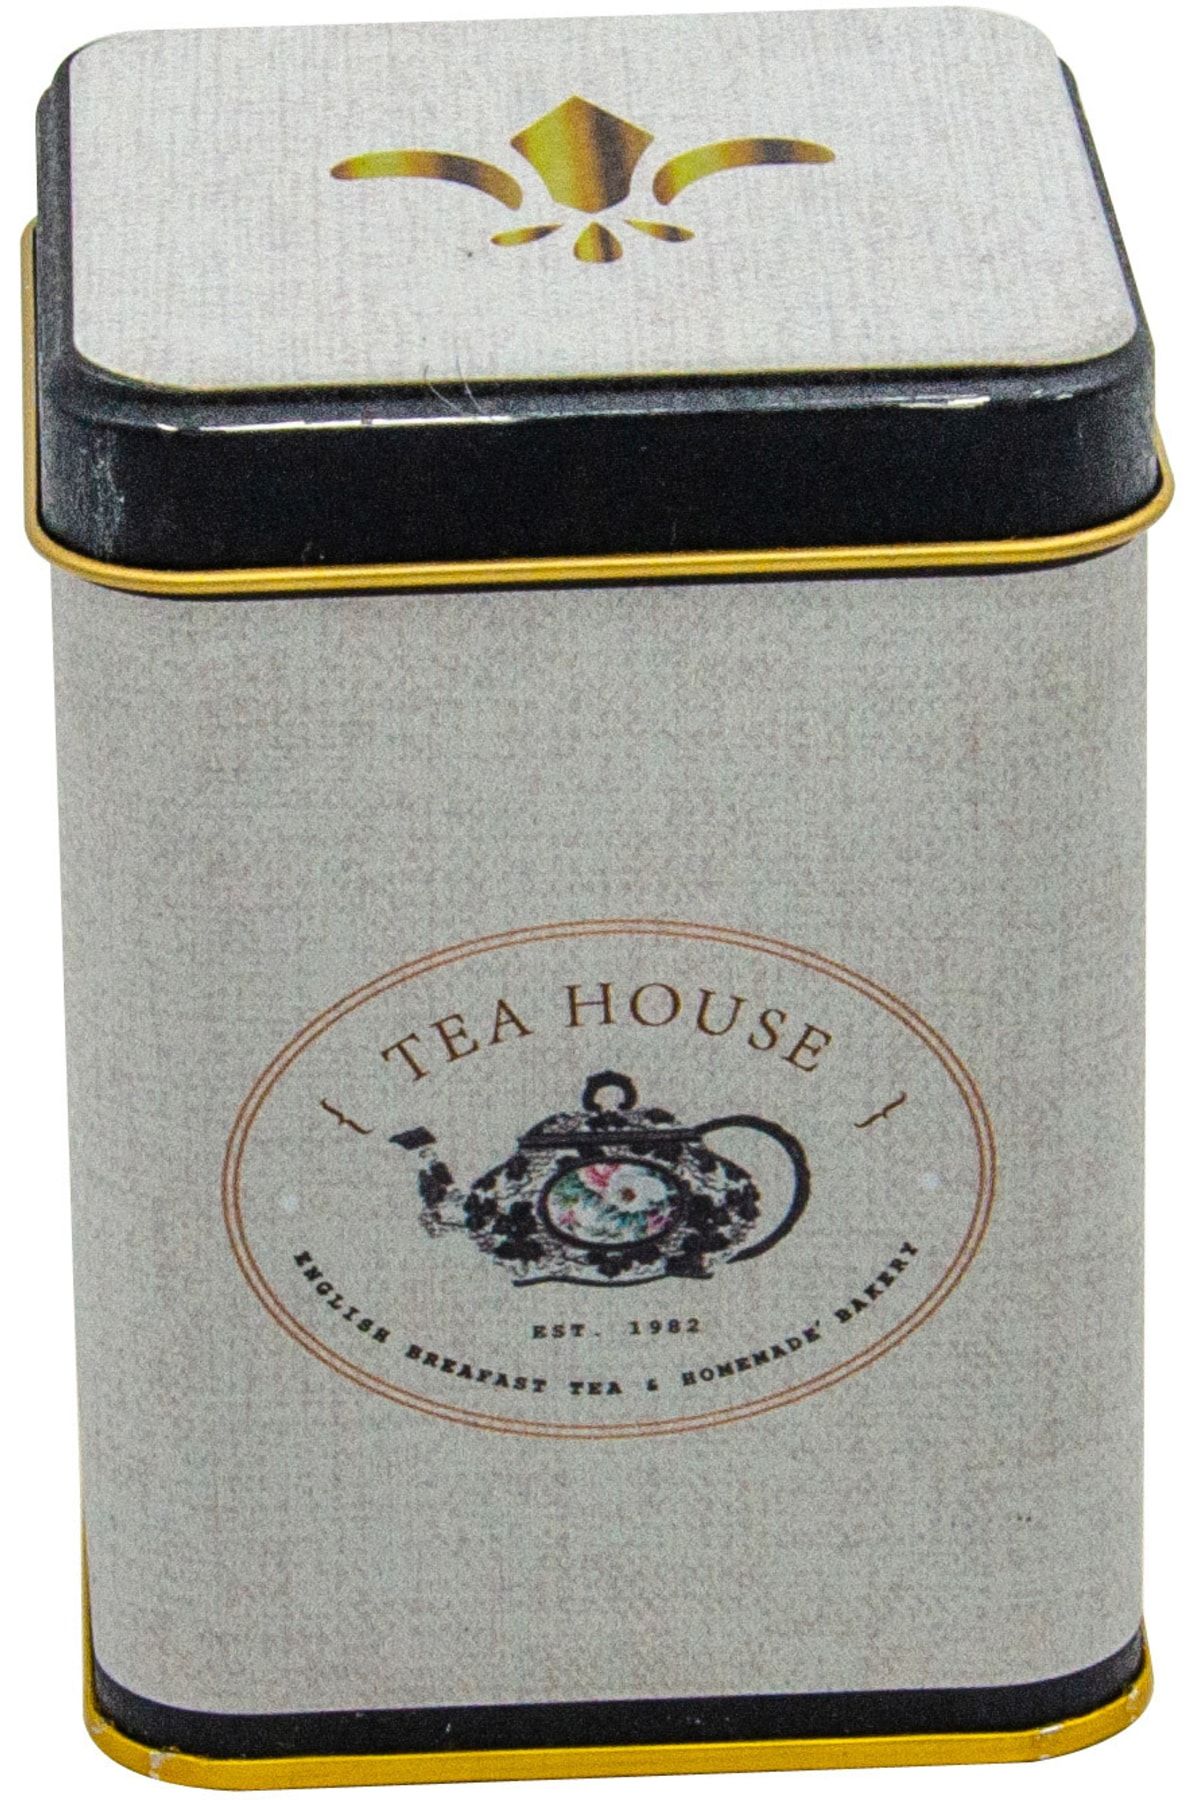 Azura Tea Desenli Kare Metal Kutu, 7.5 x 7.5 x 10 cm, 0.5 lt